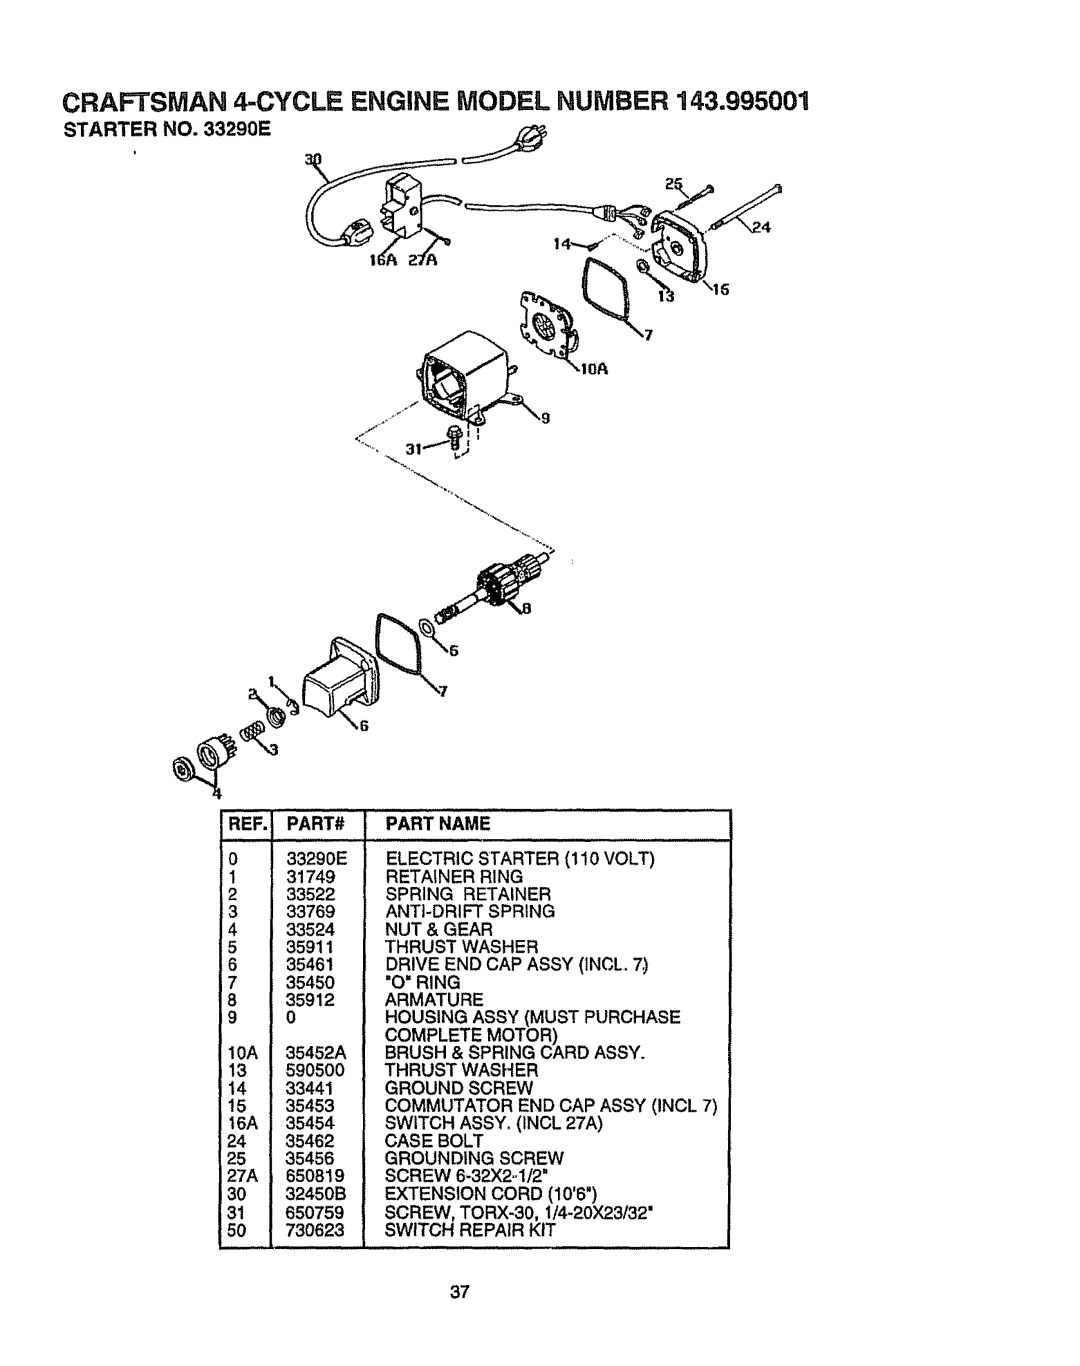 Craftsman 536.886141 manual Starter no E PART#, Part Name Electric Starter 110 Volt Retainer Ring 